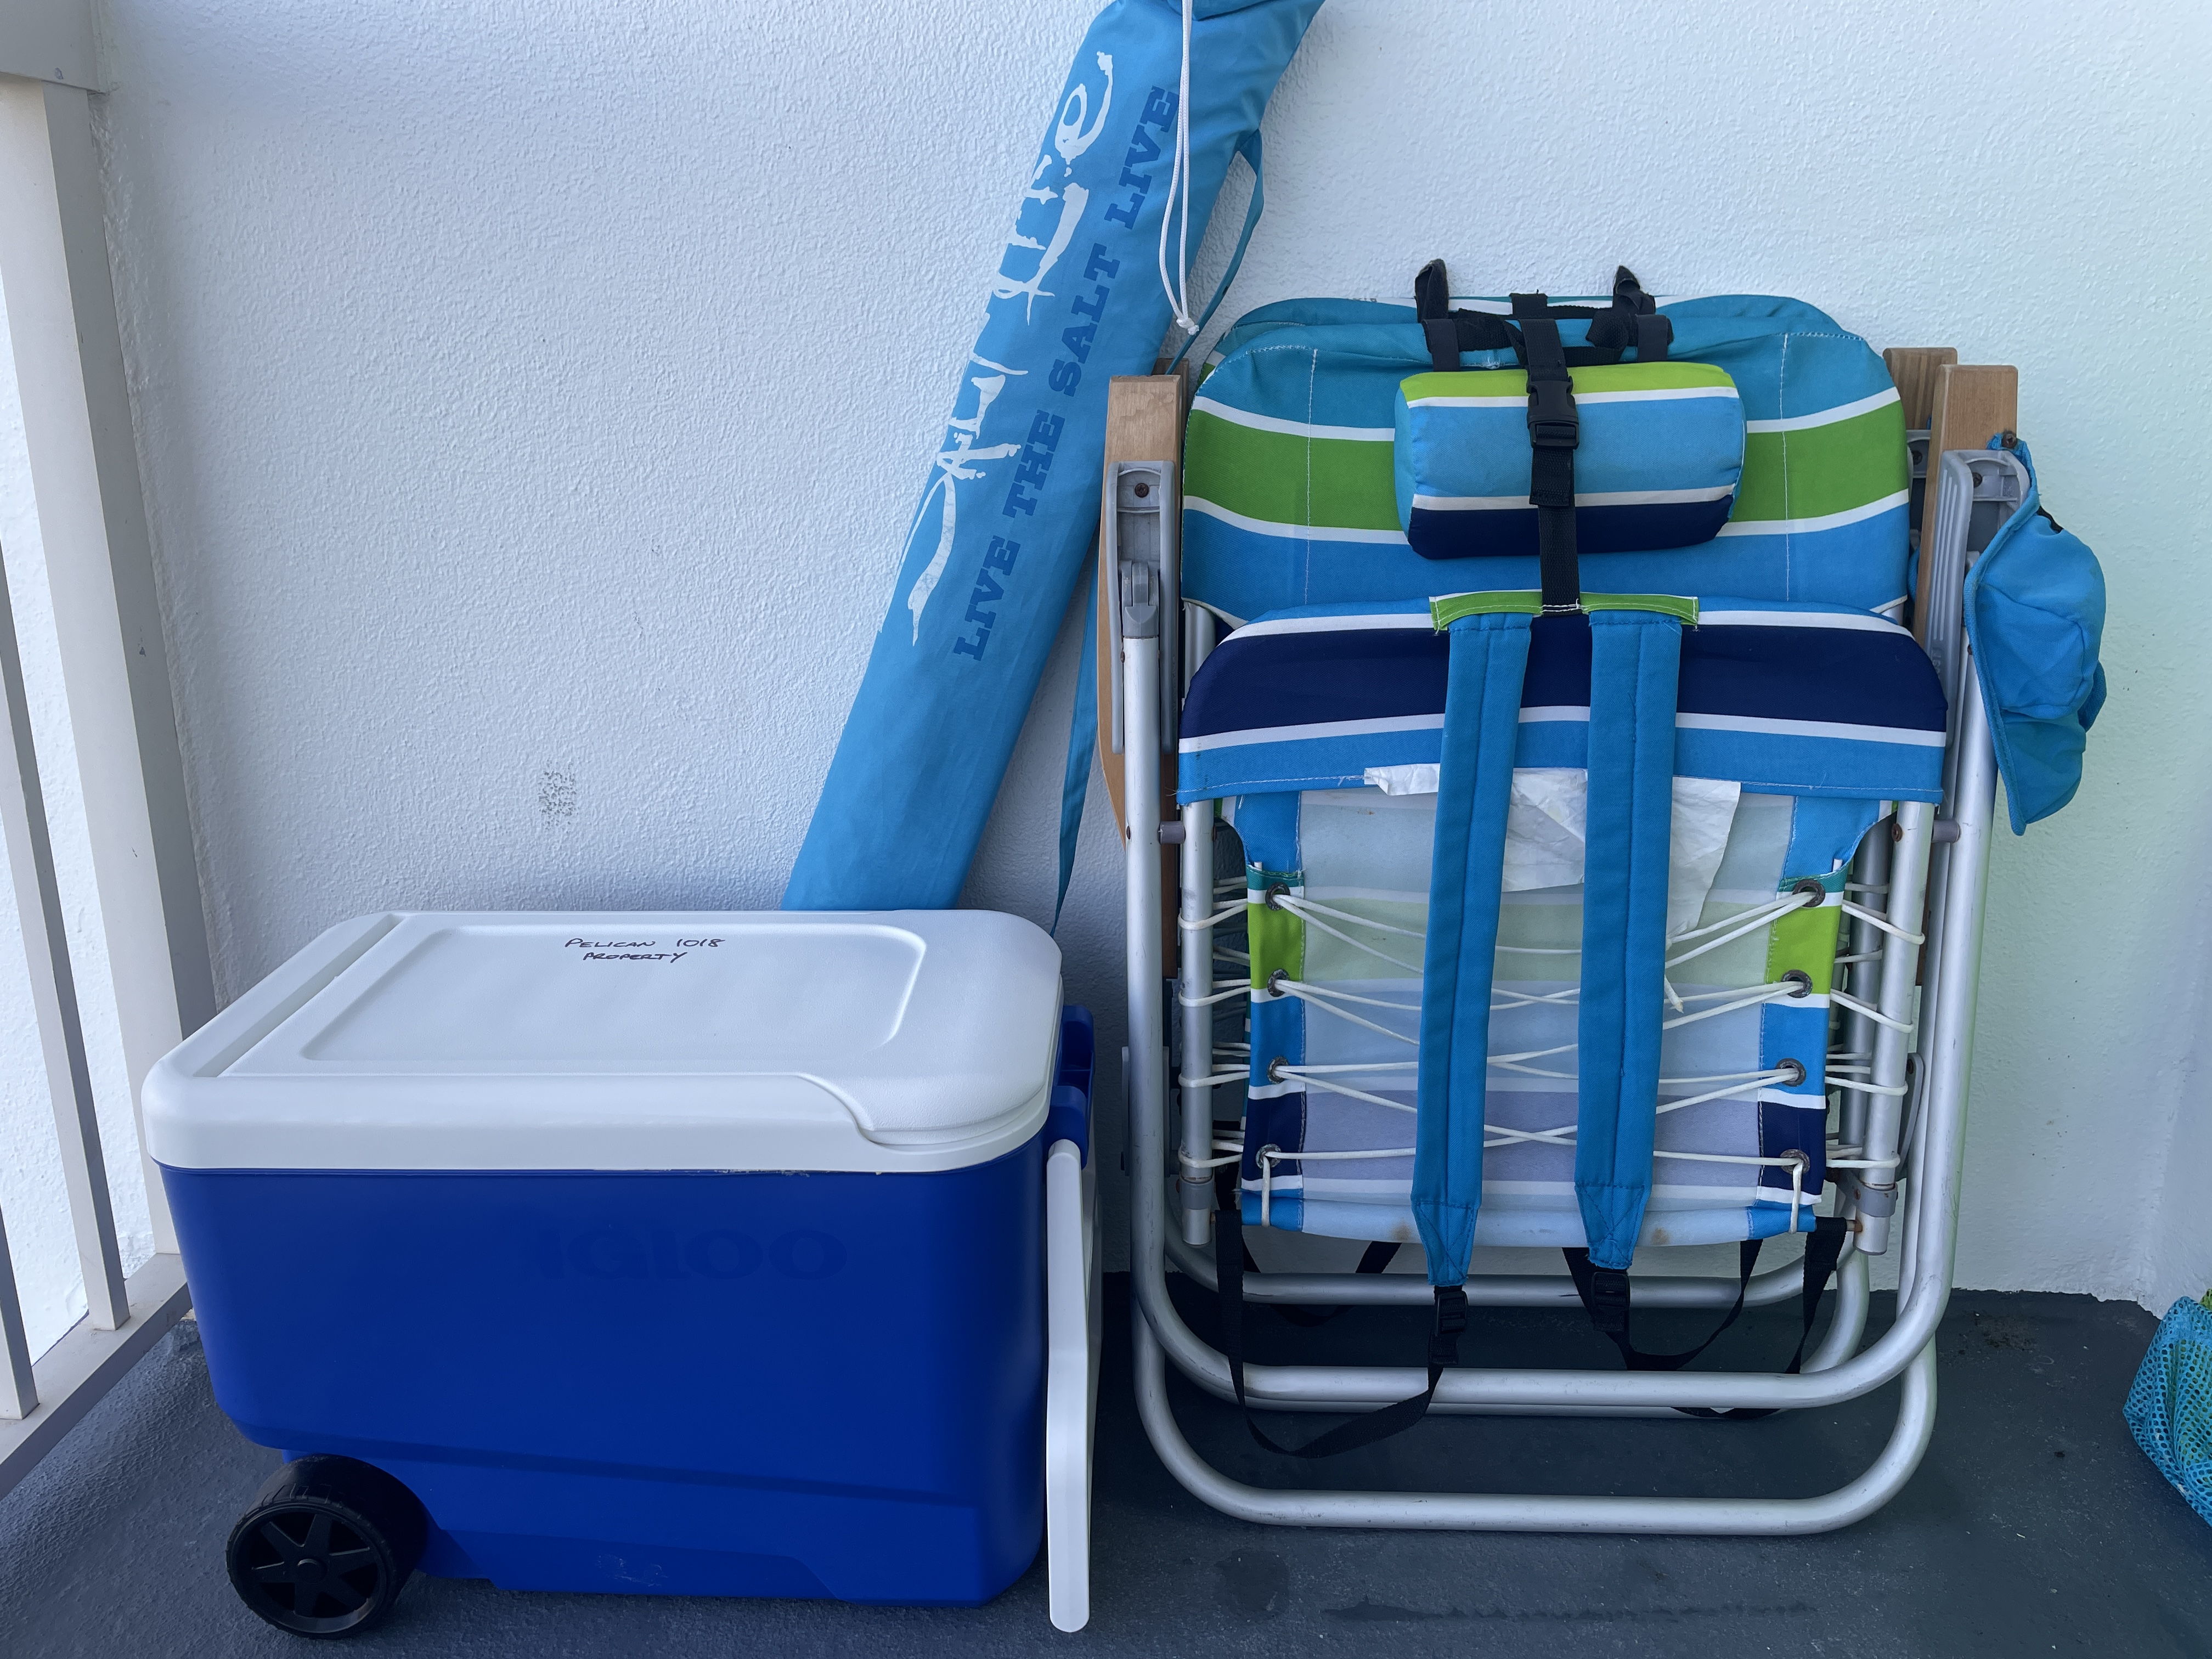 Beach chairs, umbrella and cooler box